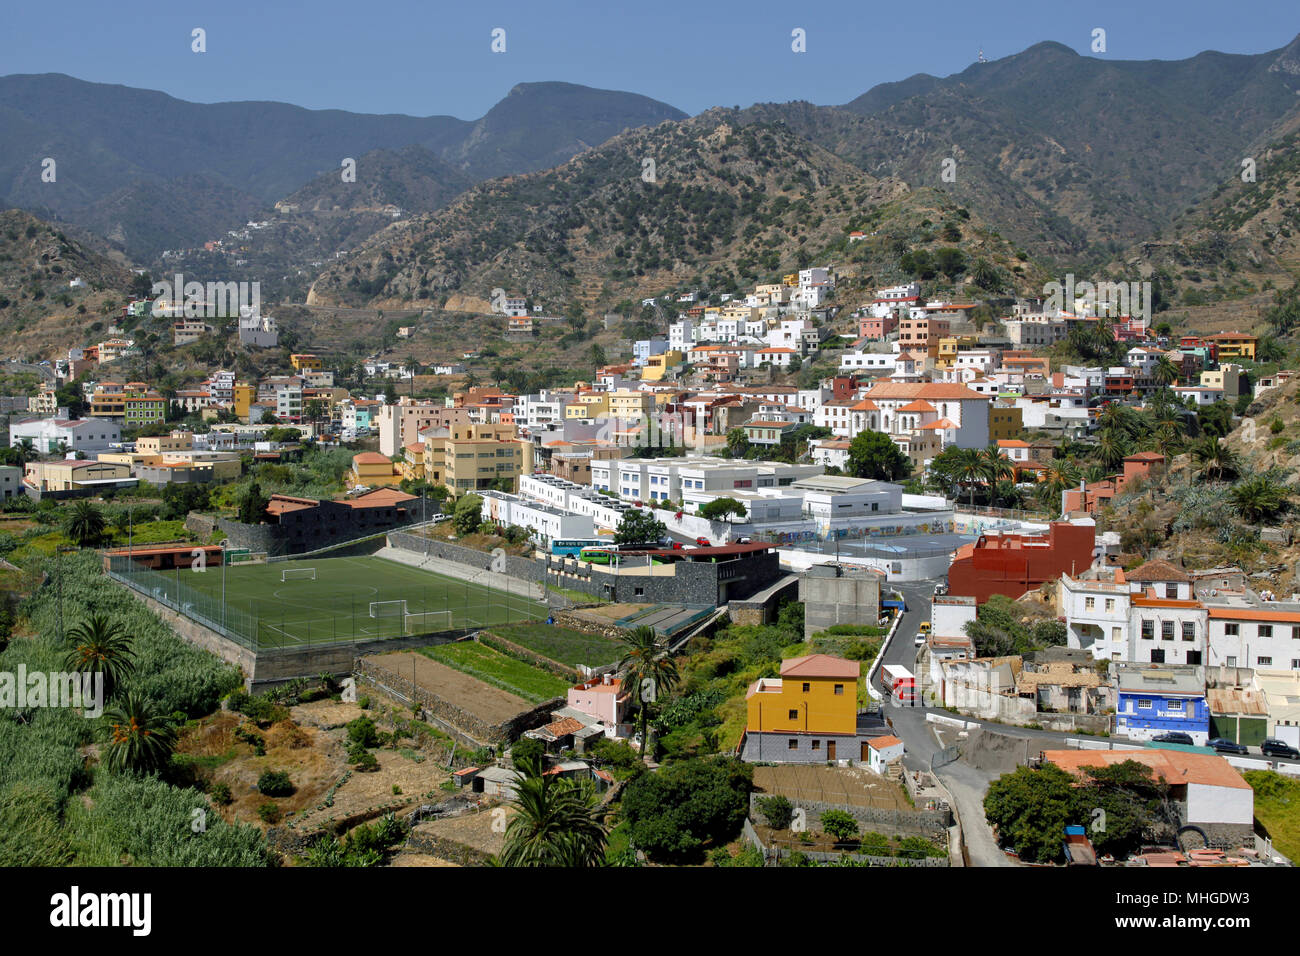 The town of Vallehermoso, La Gomera Island, Santa Cruz de Tenerife, Canary Islands, Spain Stock Photo